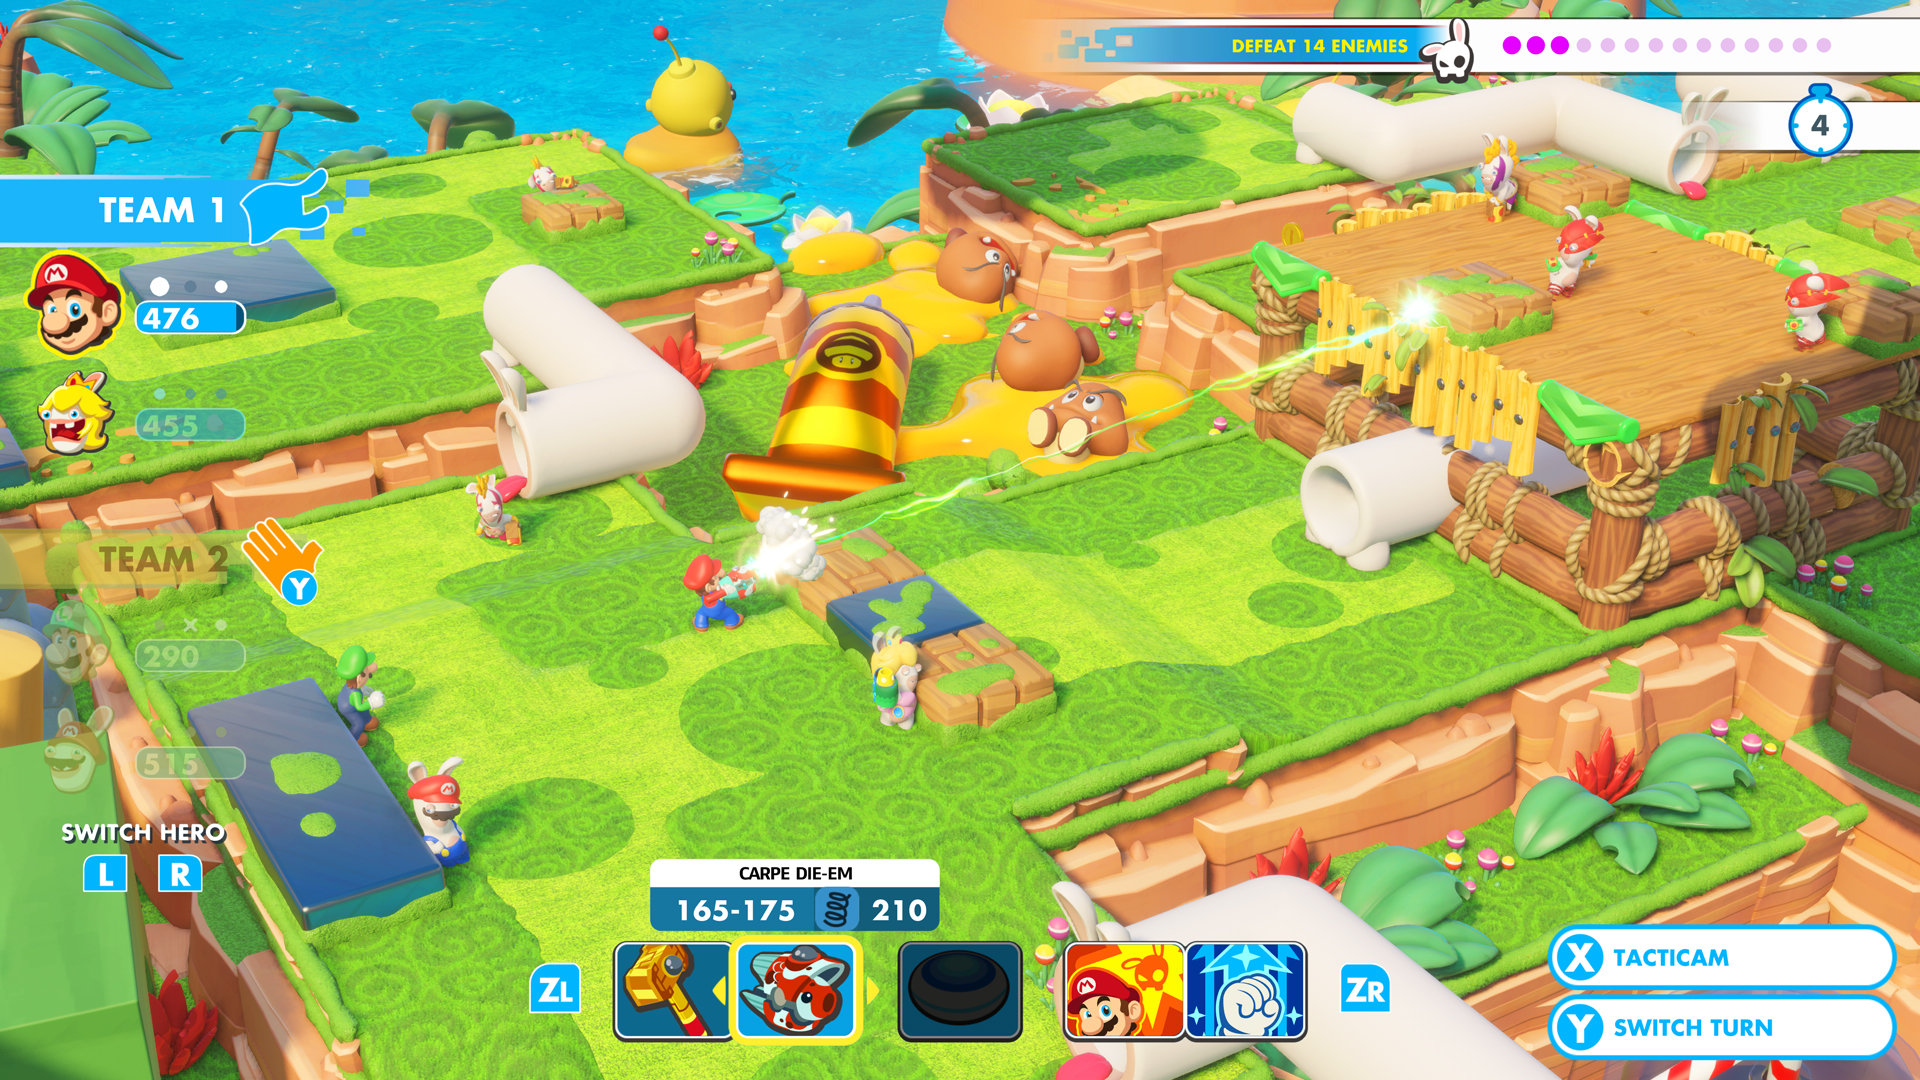 Mario and Rabbid Peach engage in battle — Mario + Rabbids Kingdom Battle